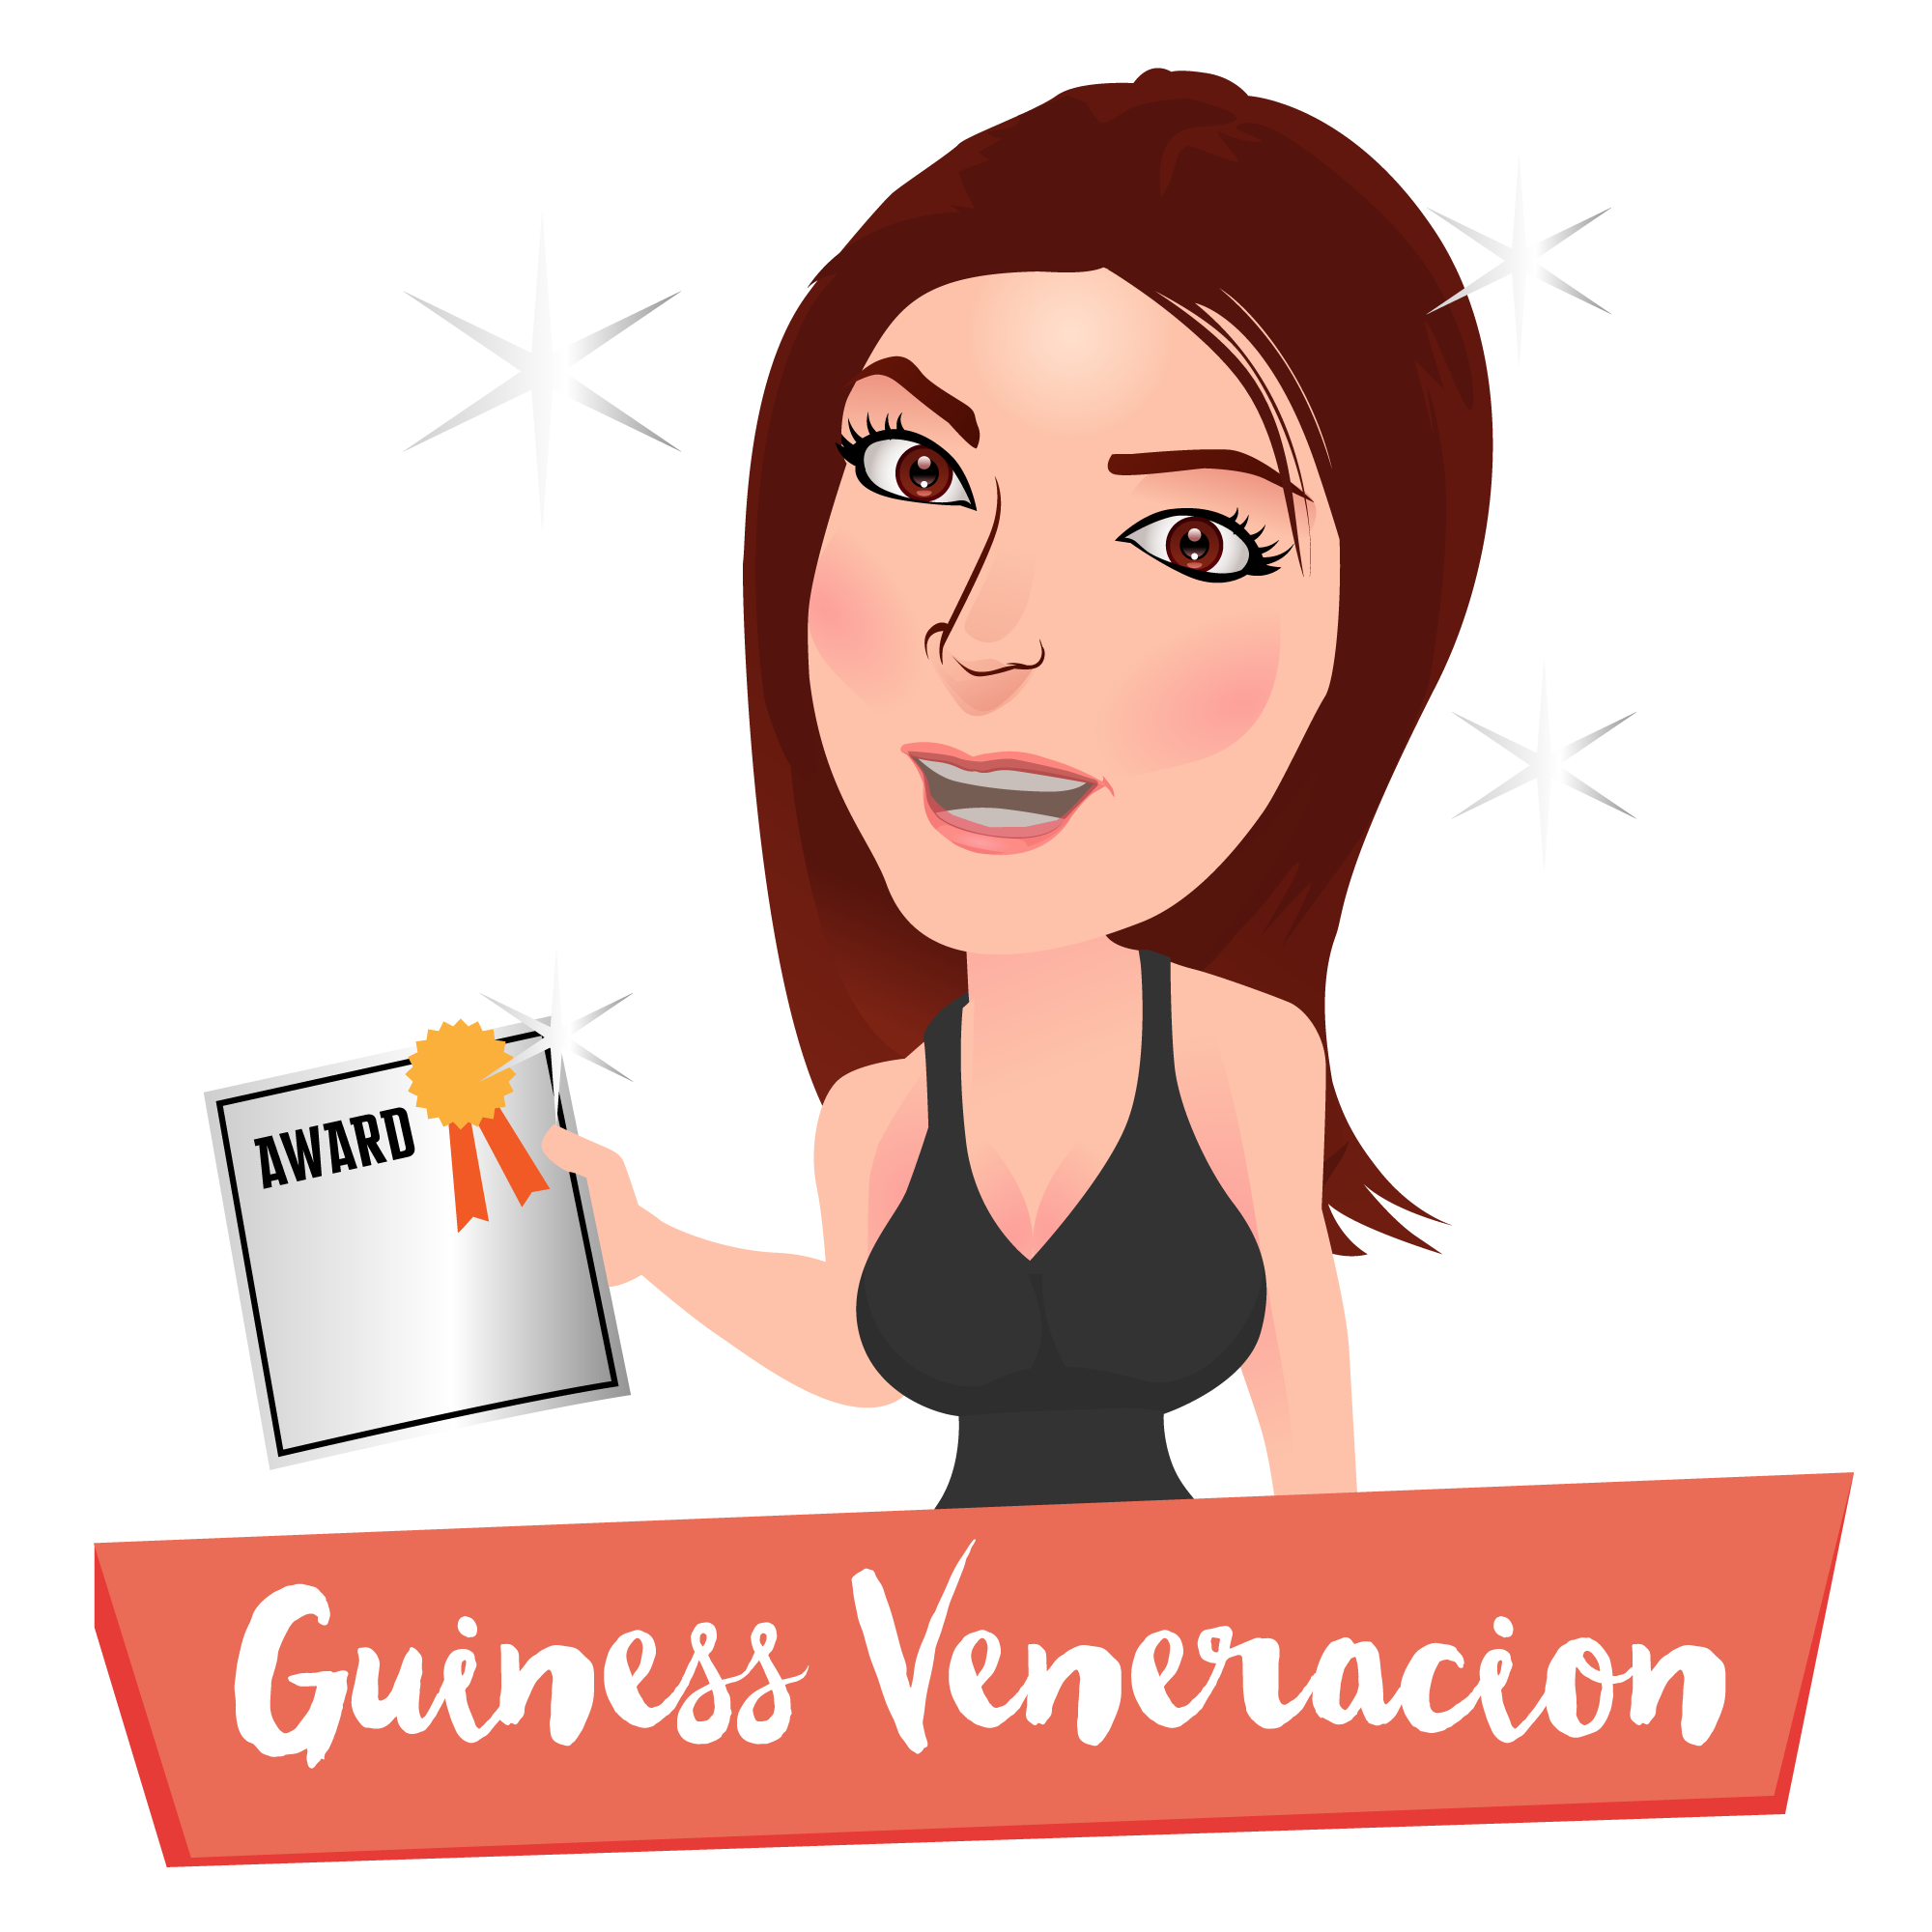 10 Uri ng empleyadong pinoy Guiness Veneracion